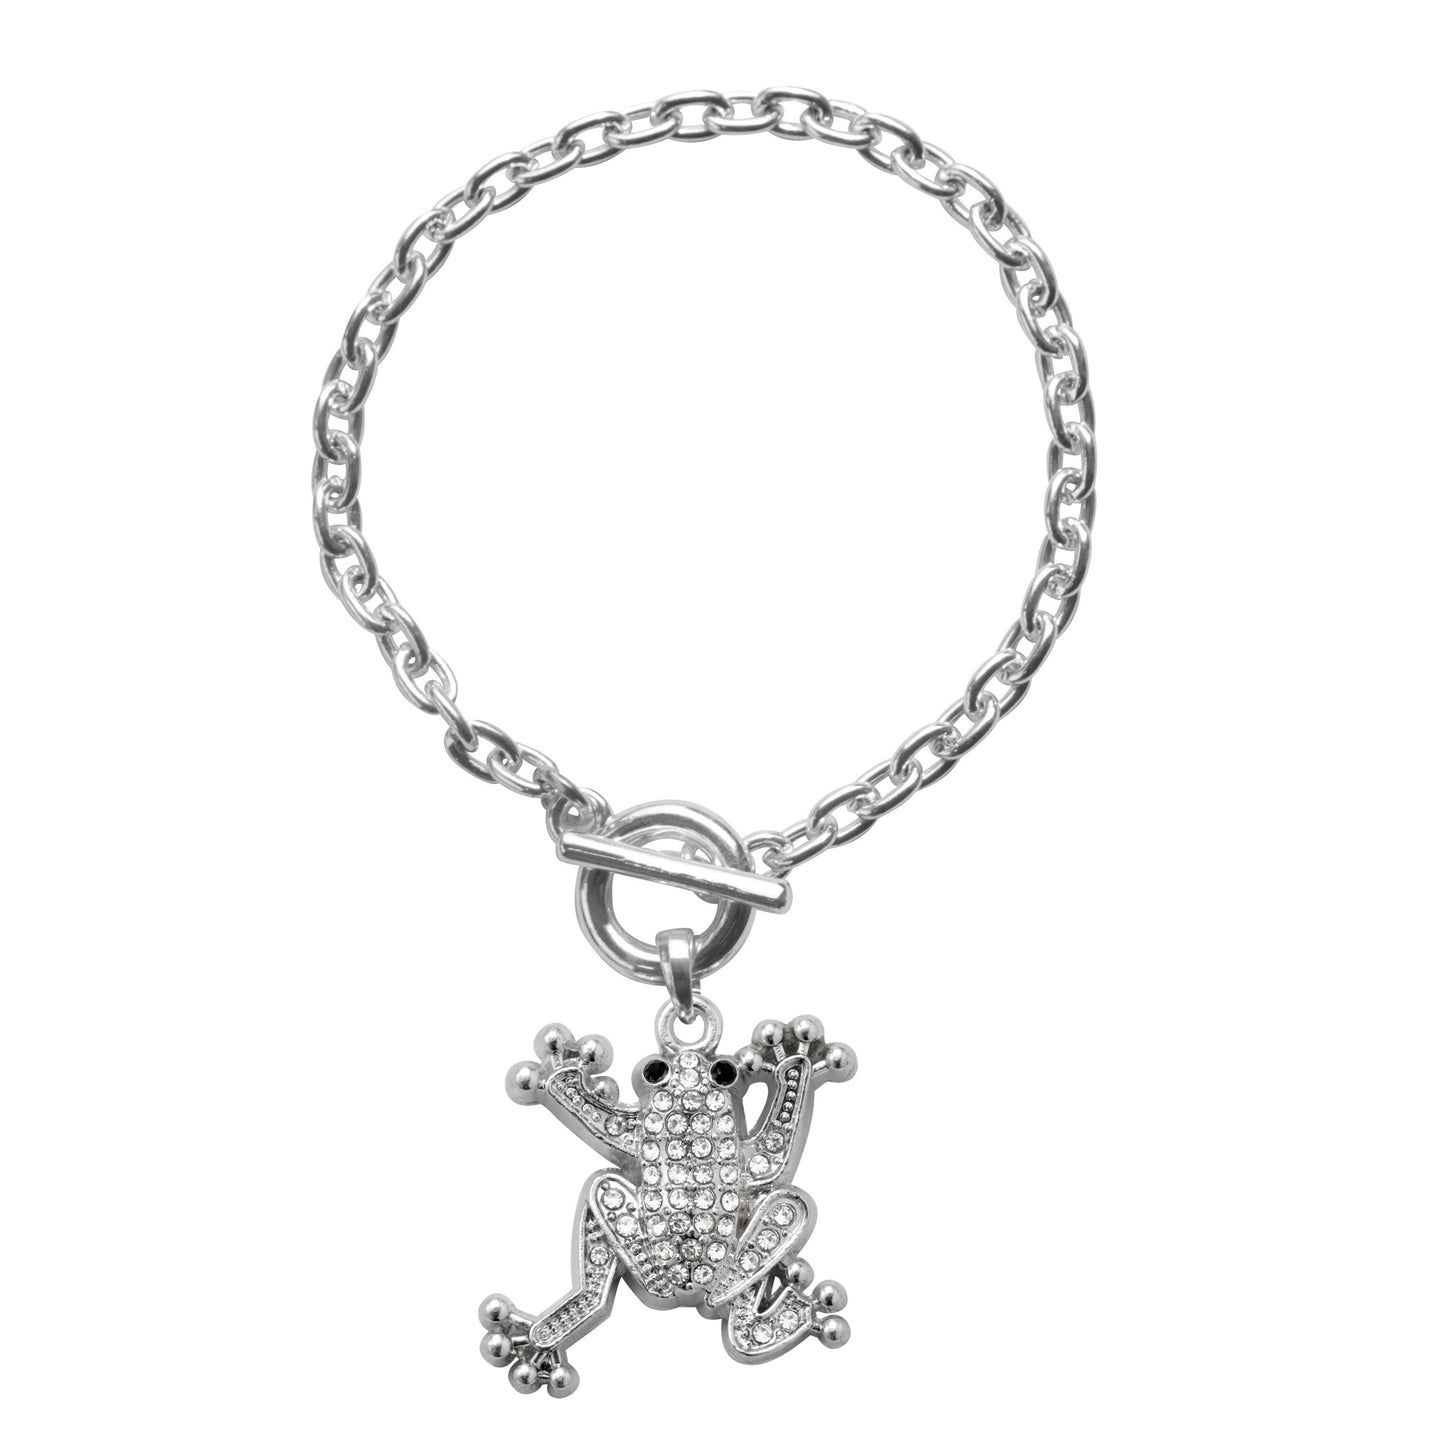 Silver Frog Charm Toggle Bracelet